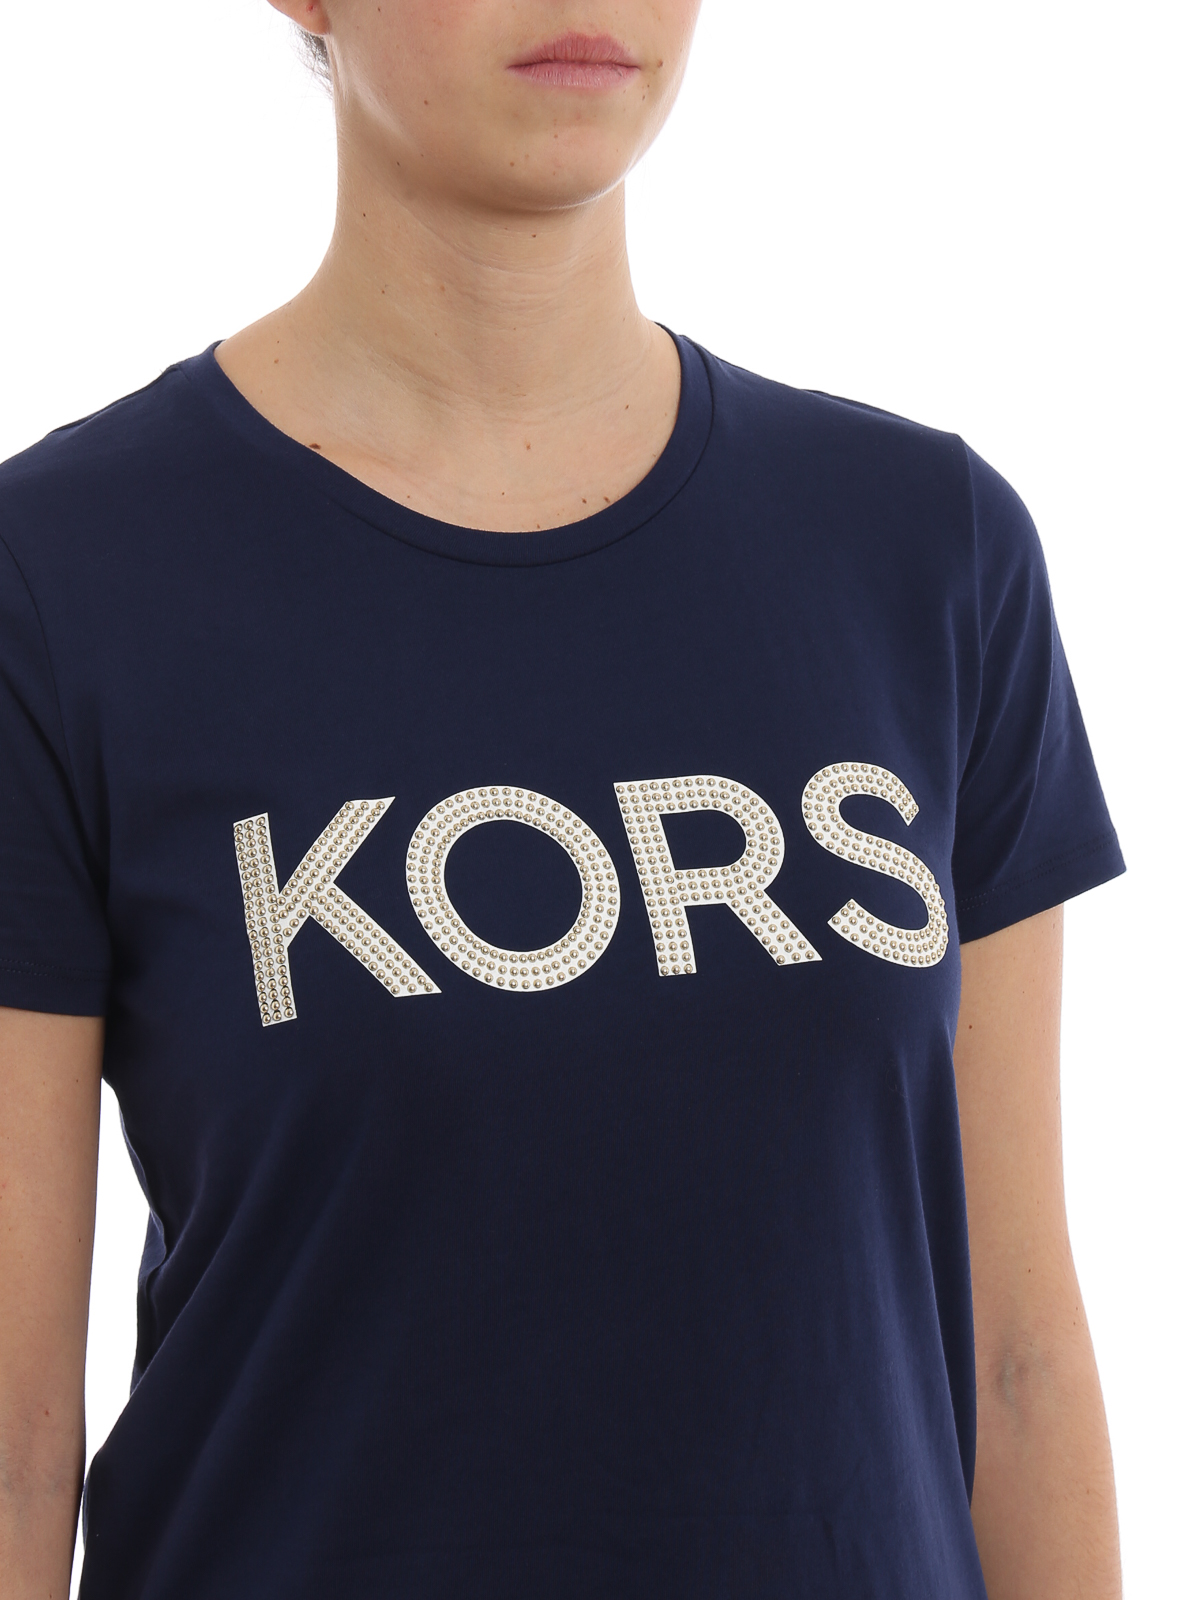 T-shirts Michael Kors - Studded Kors logo blue cotton T-shirt -  MH85M2Y97J456